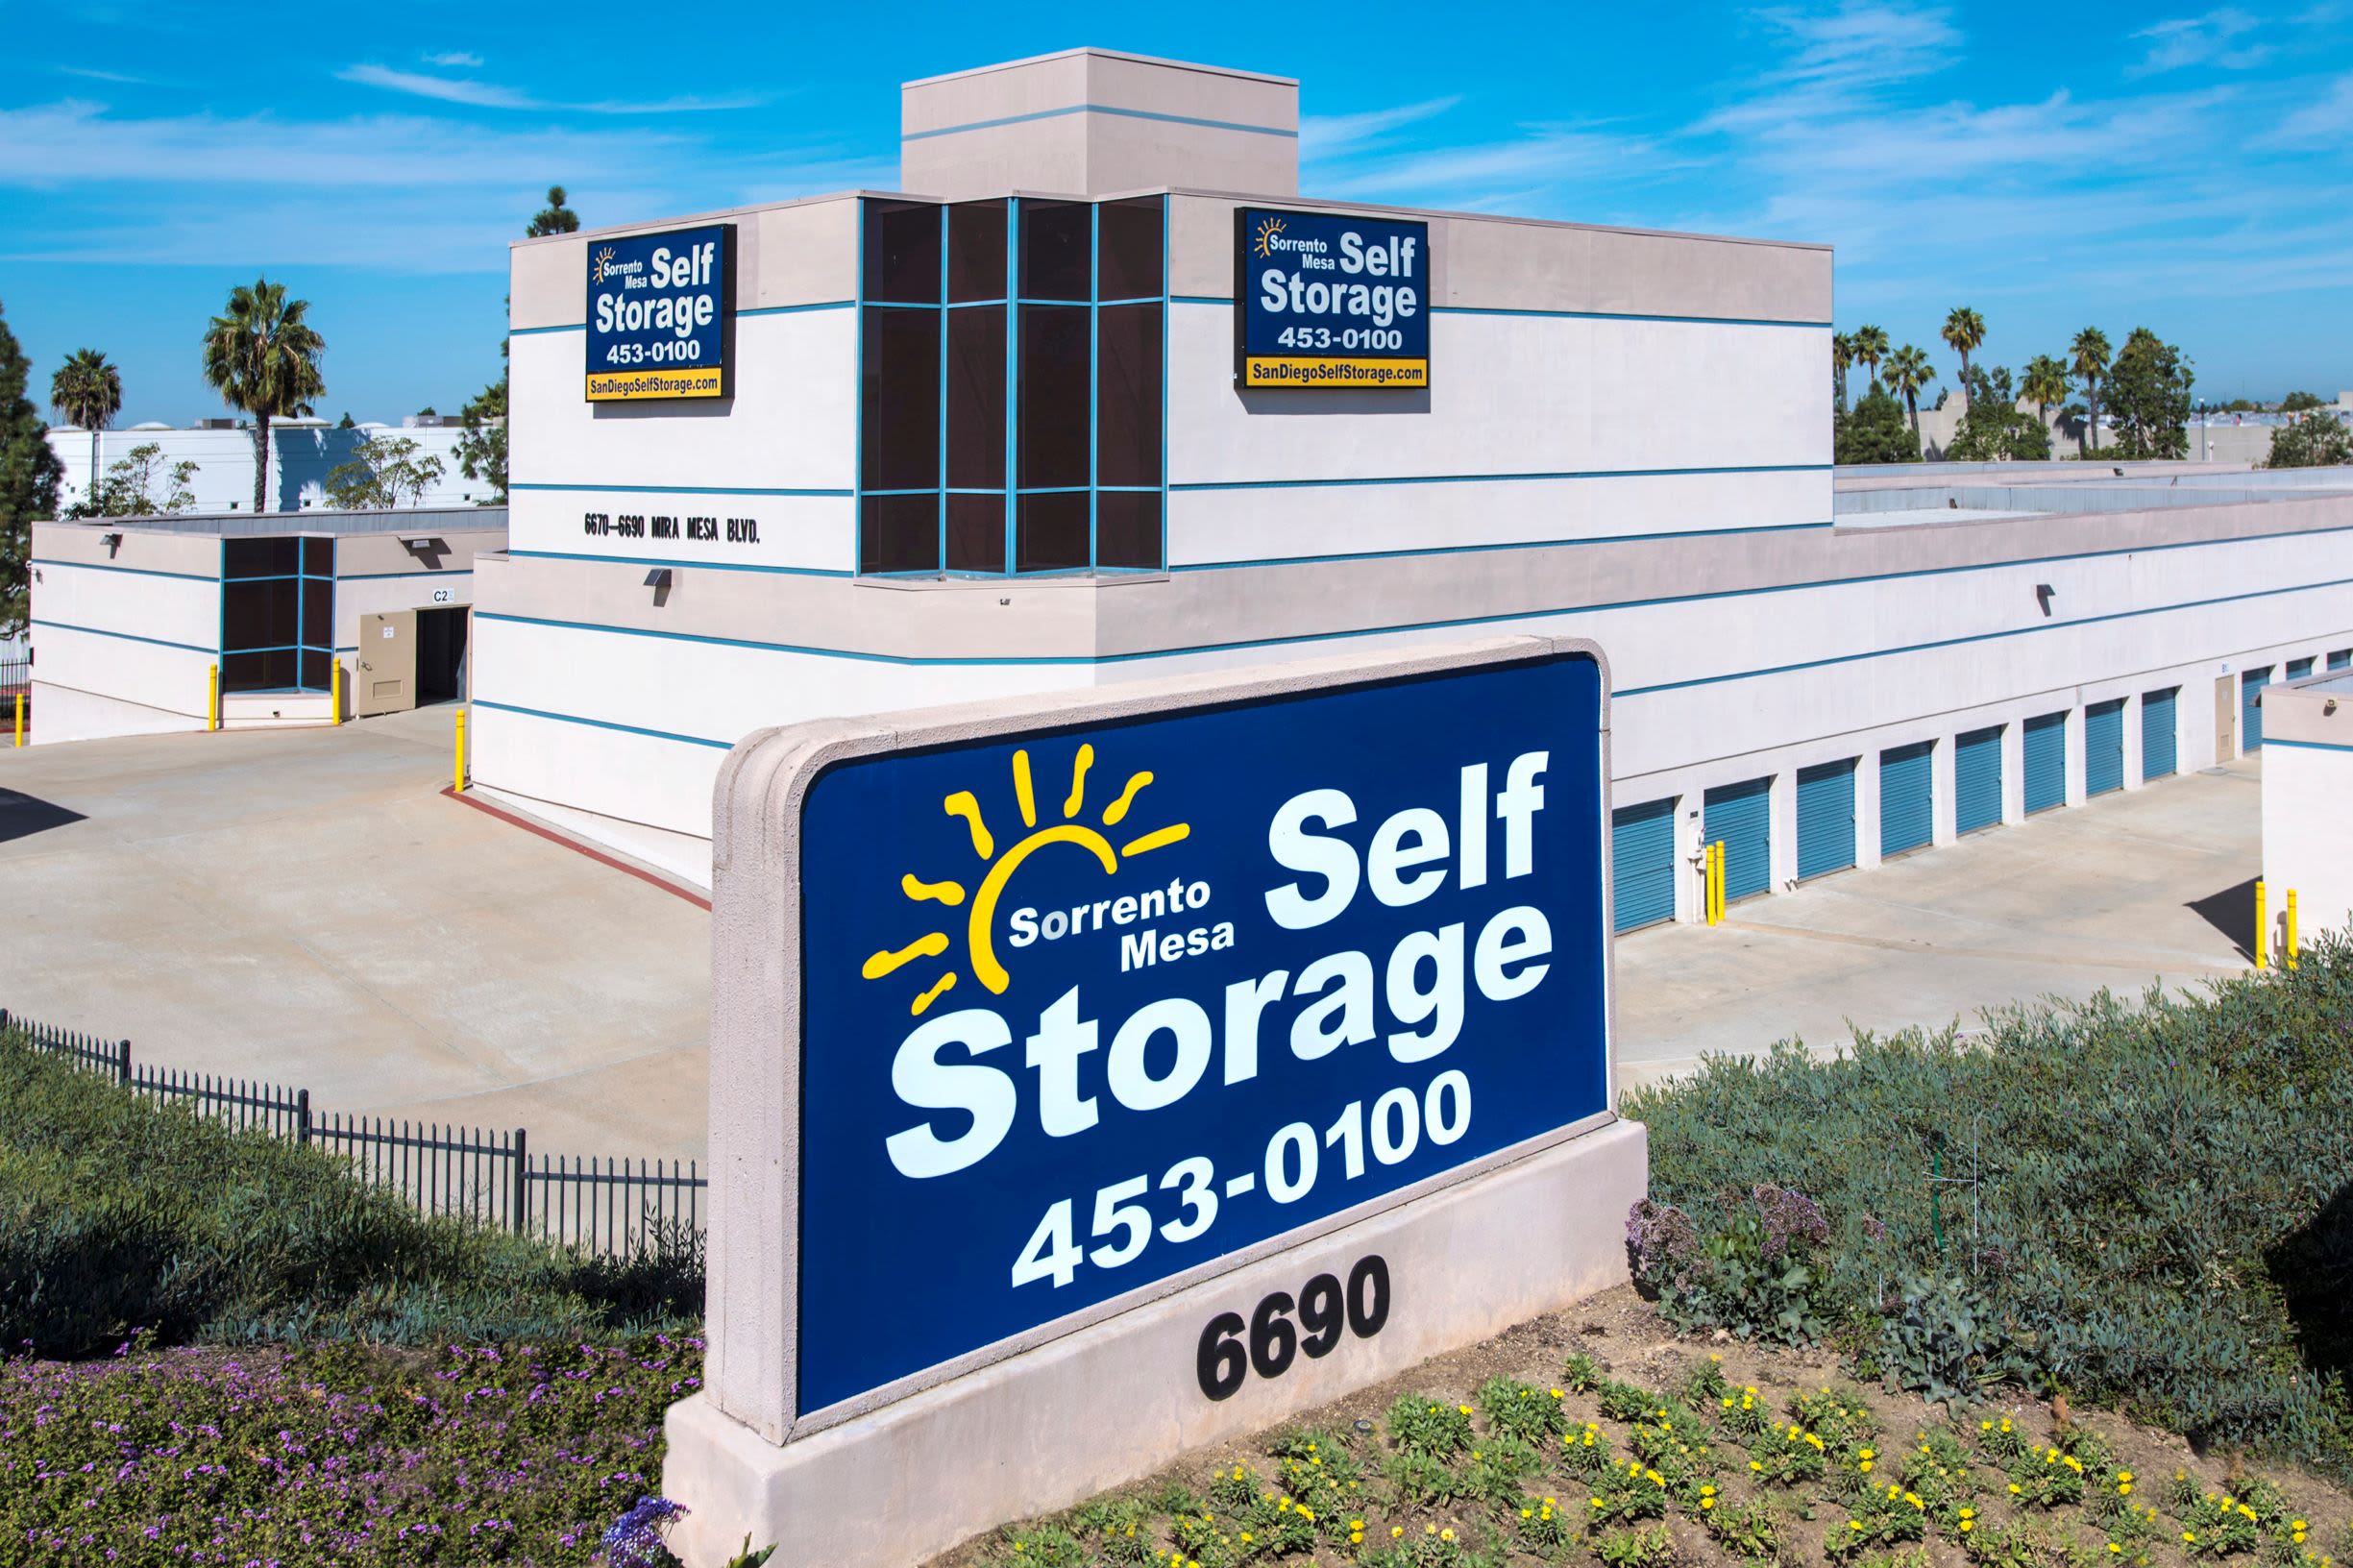 Signage at Sorrento Mesa Self Storage in San Diego, CA